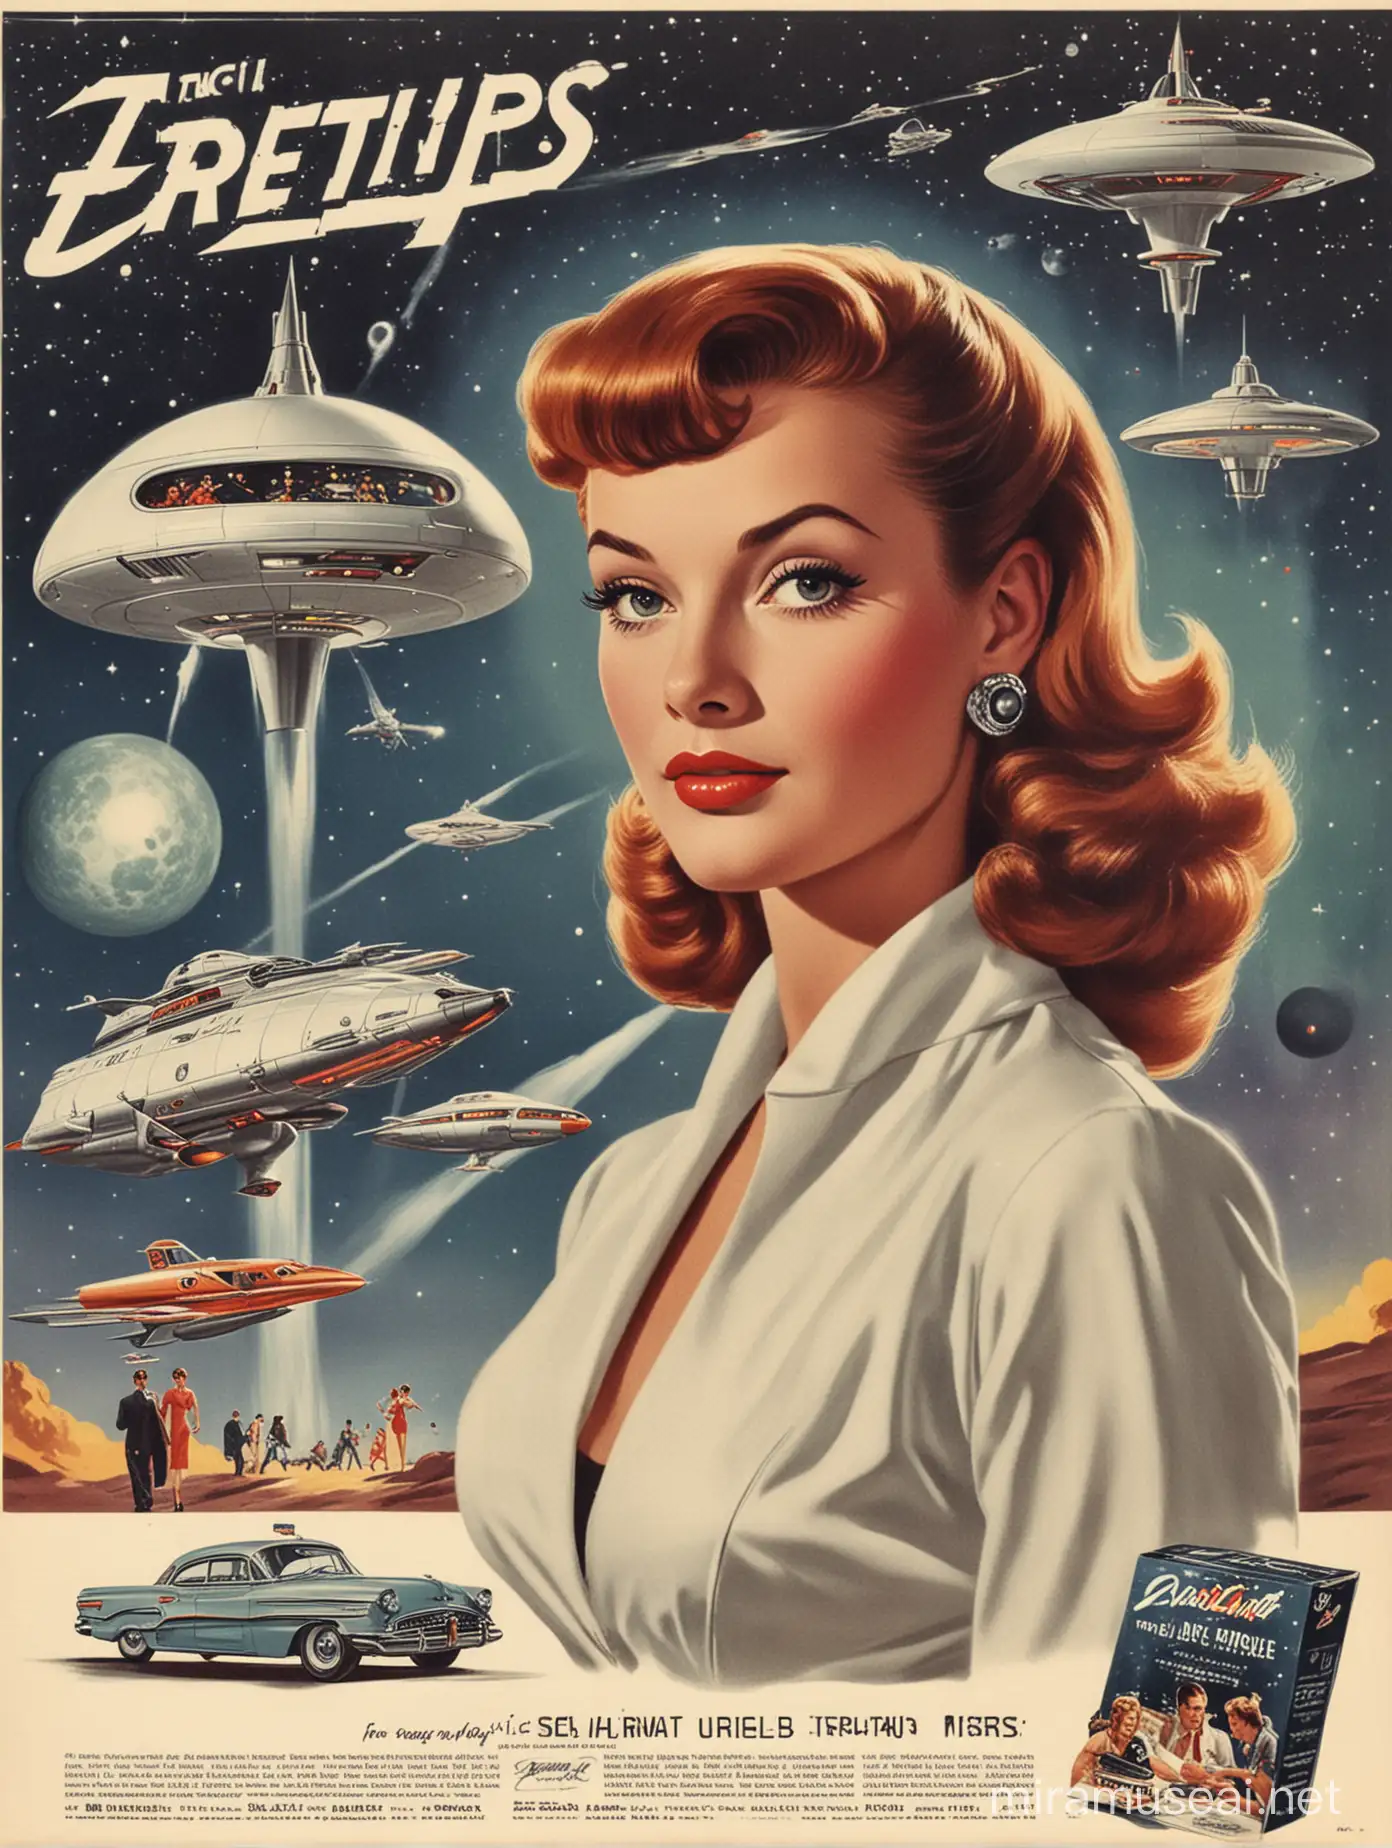 Retro Futuristic SciFi Advertisement Featuring 1950s Style Aesthetics